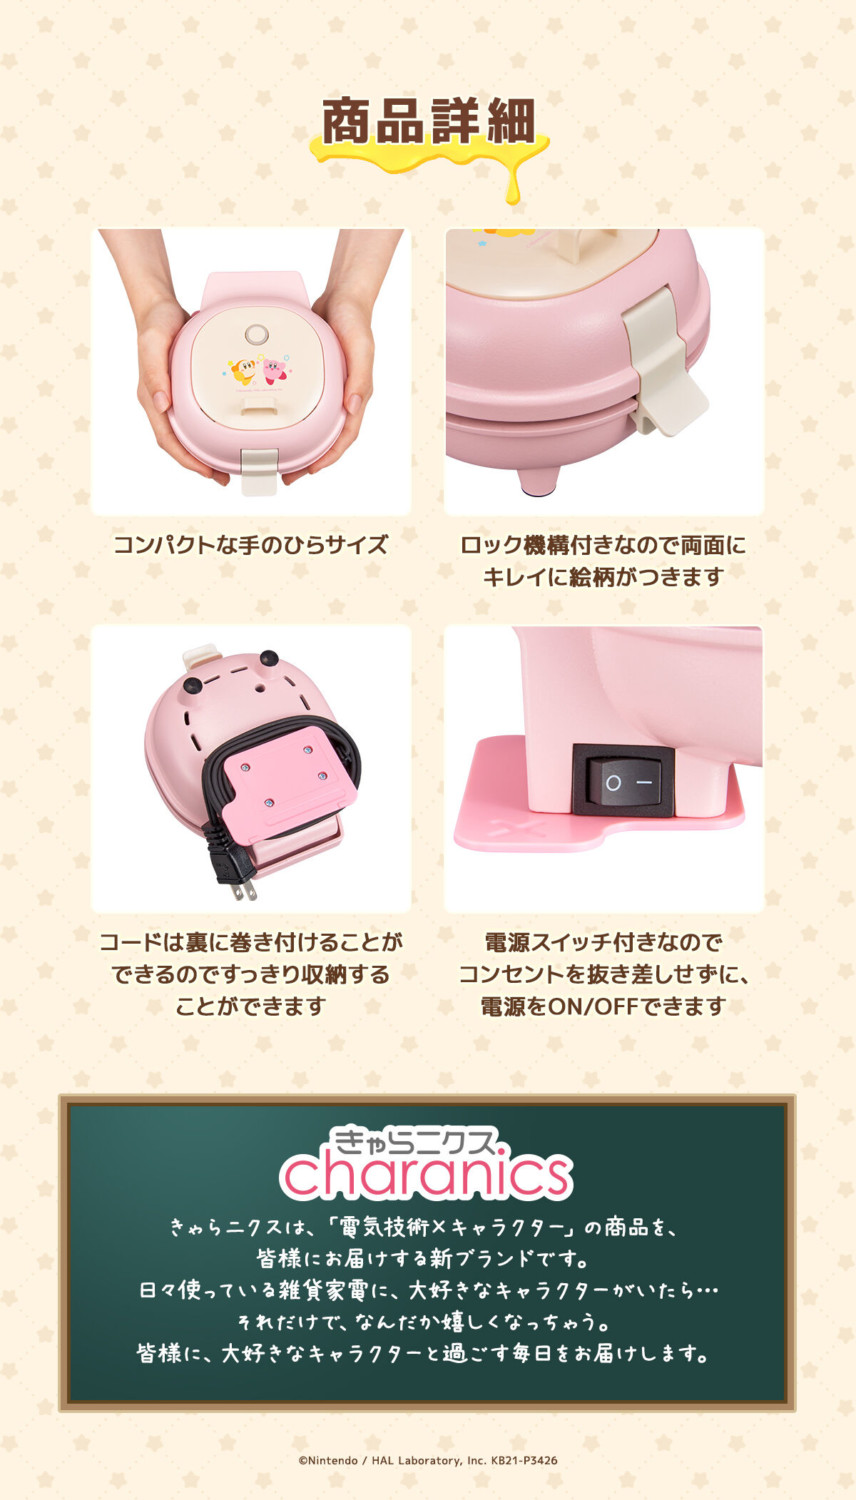 Kirby Pancake Maker from Premium Bandai Japan : r/Kirby